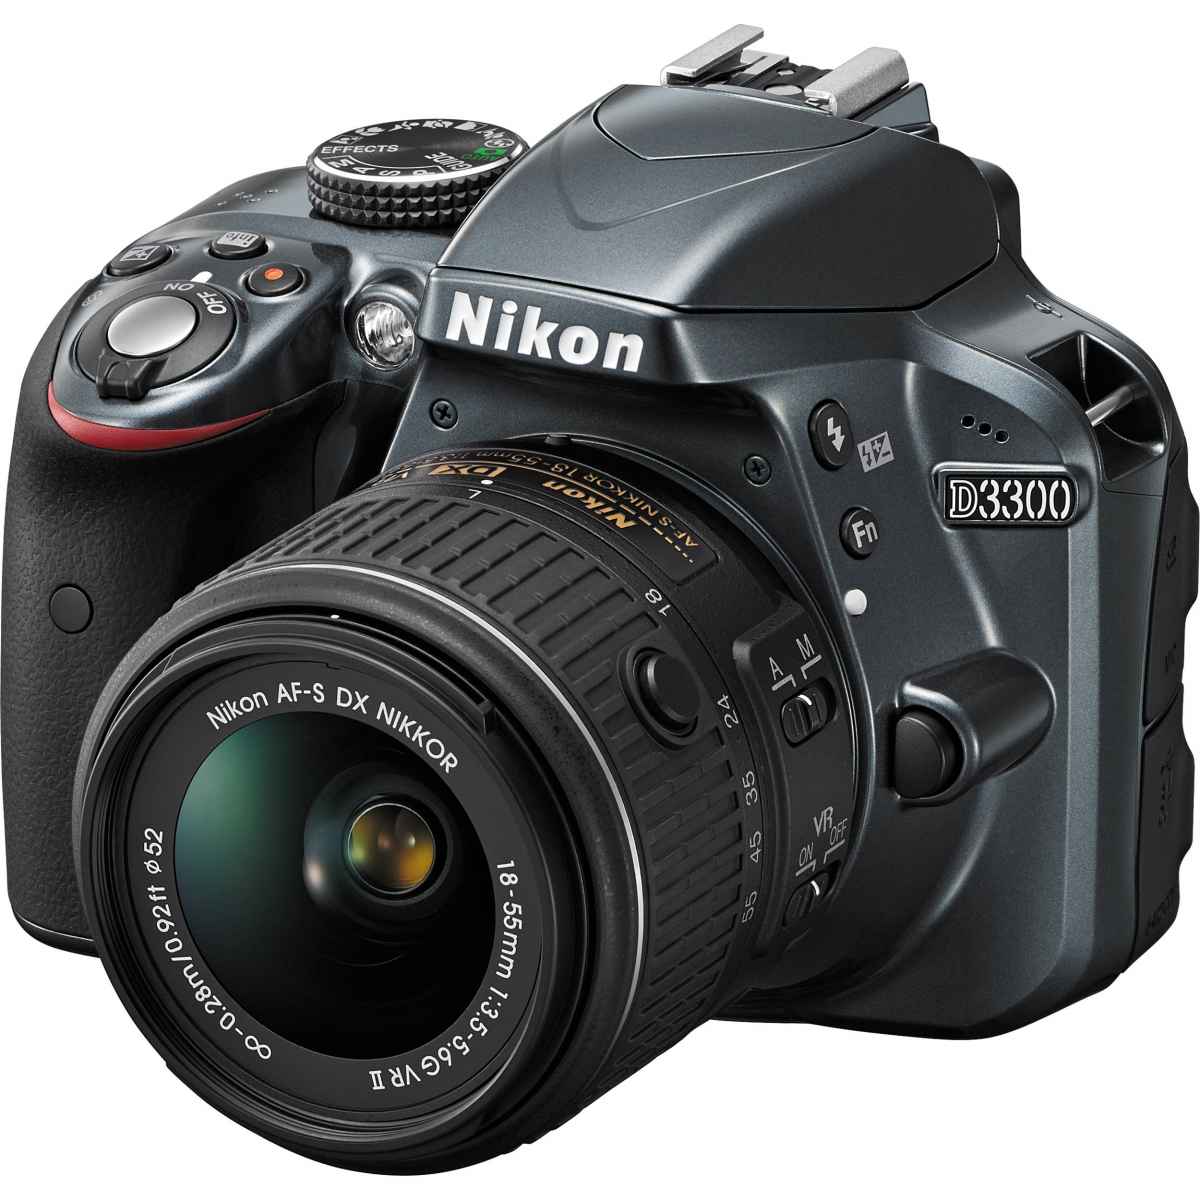 Nikon D3300 Digital SLR Camera best price bd